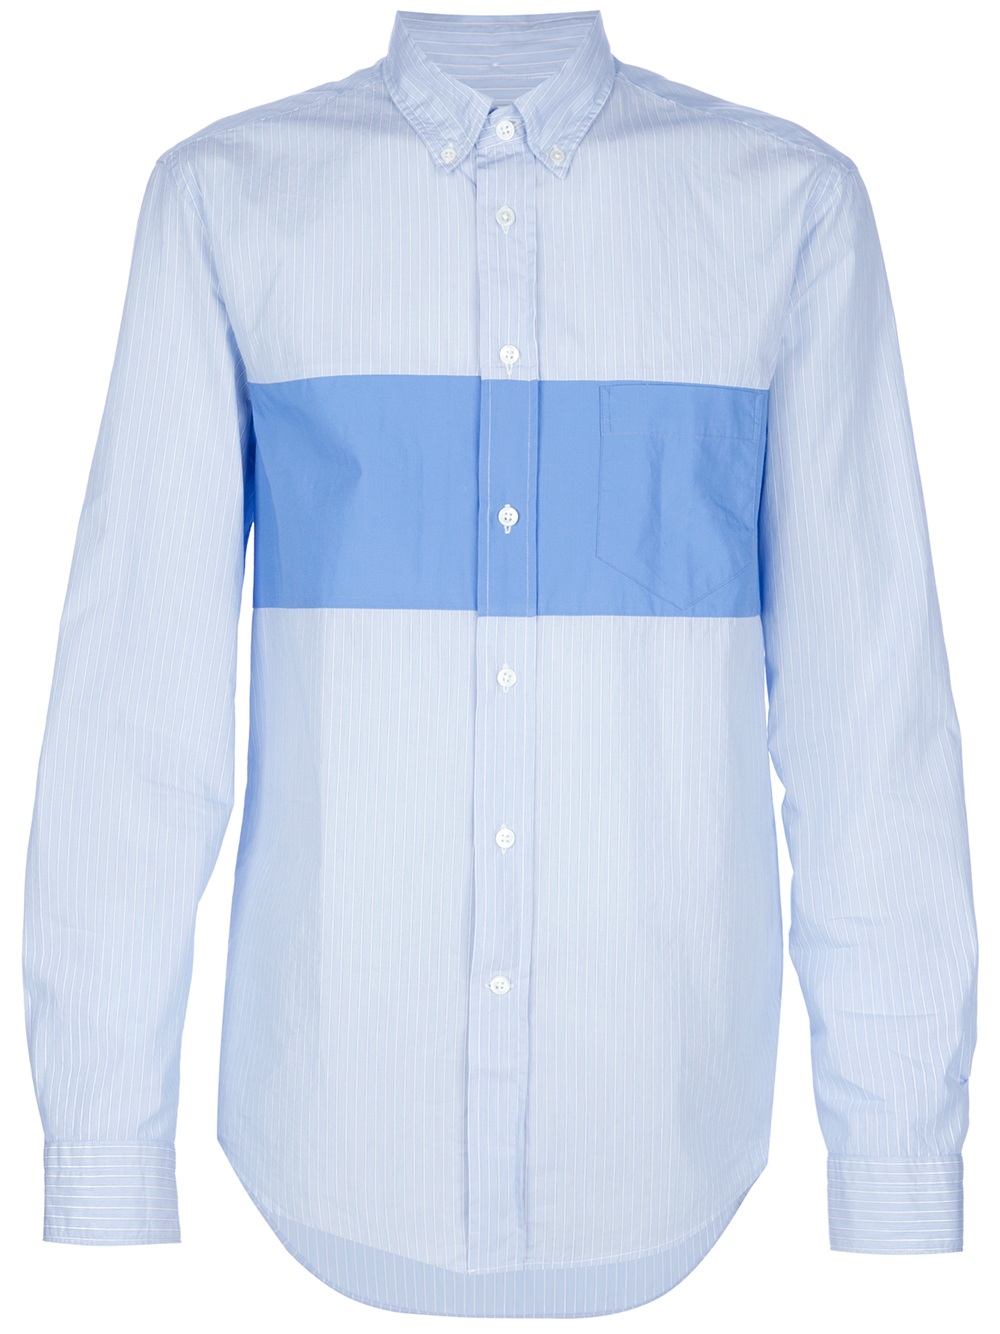 Acne Studios Striped Shirt in Blue for Men - Lyst